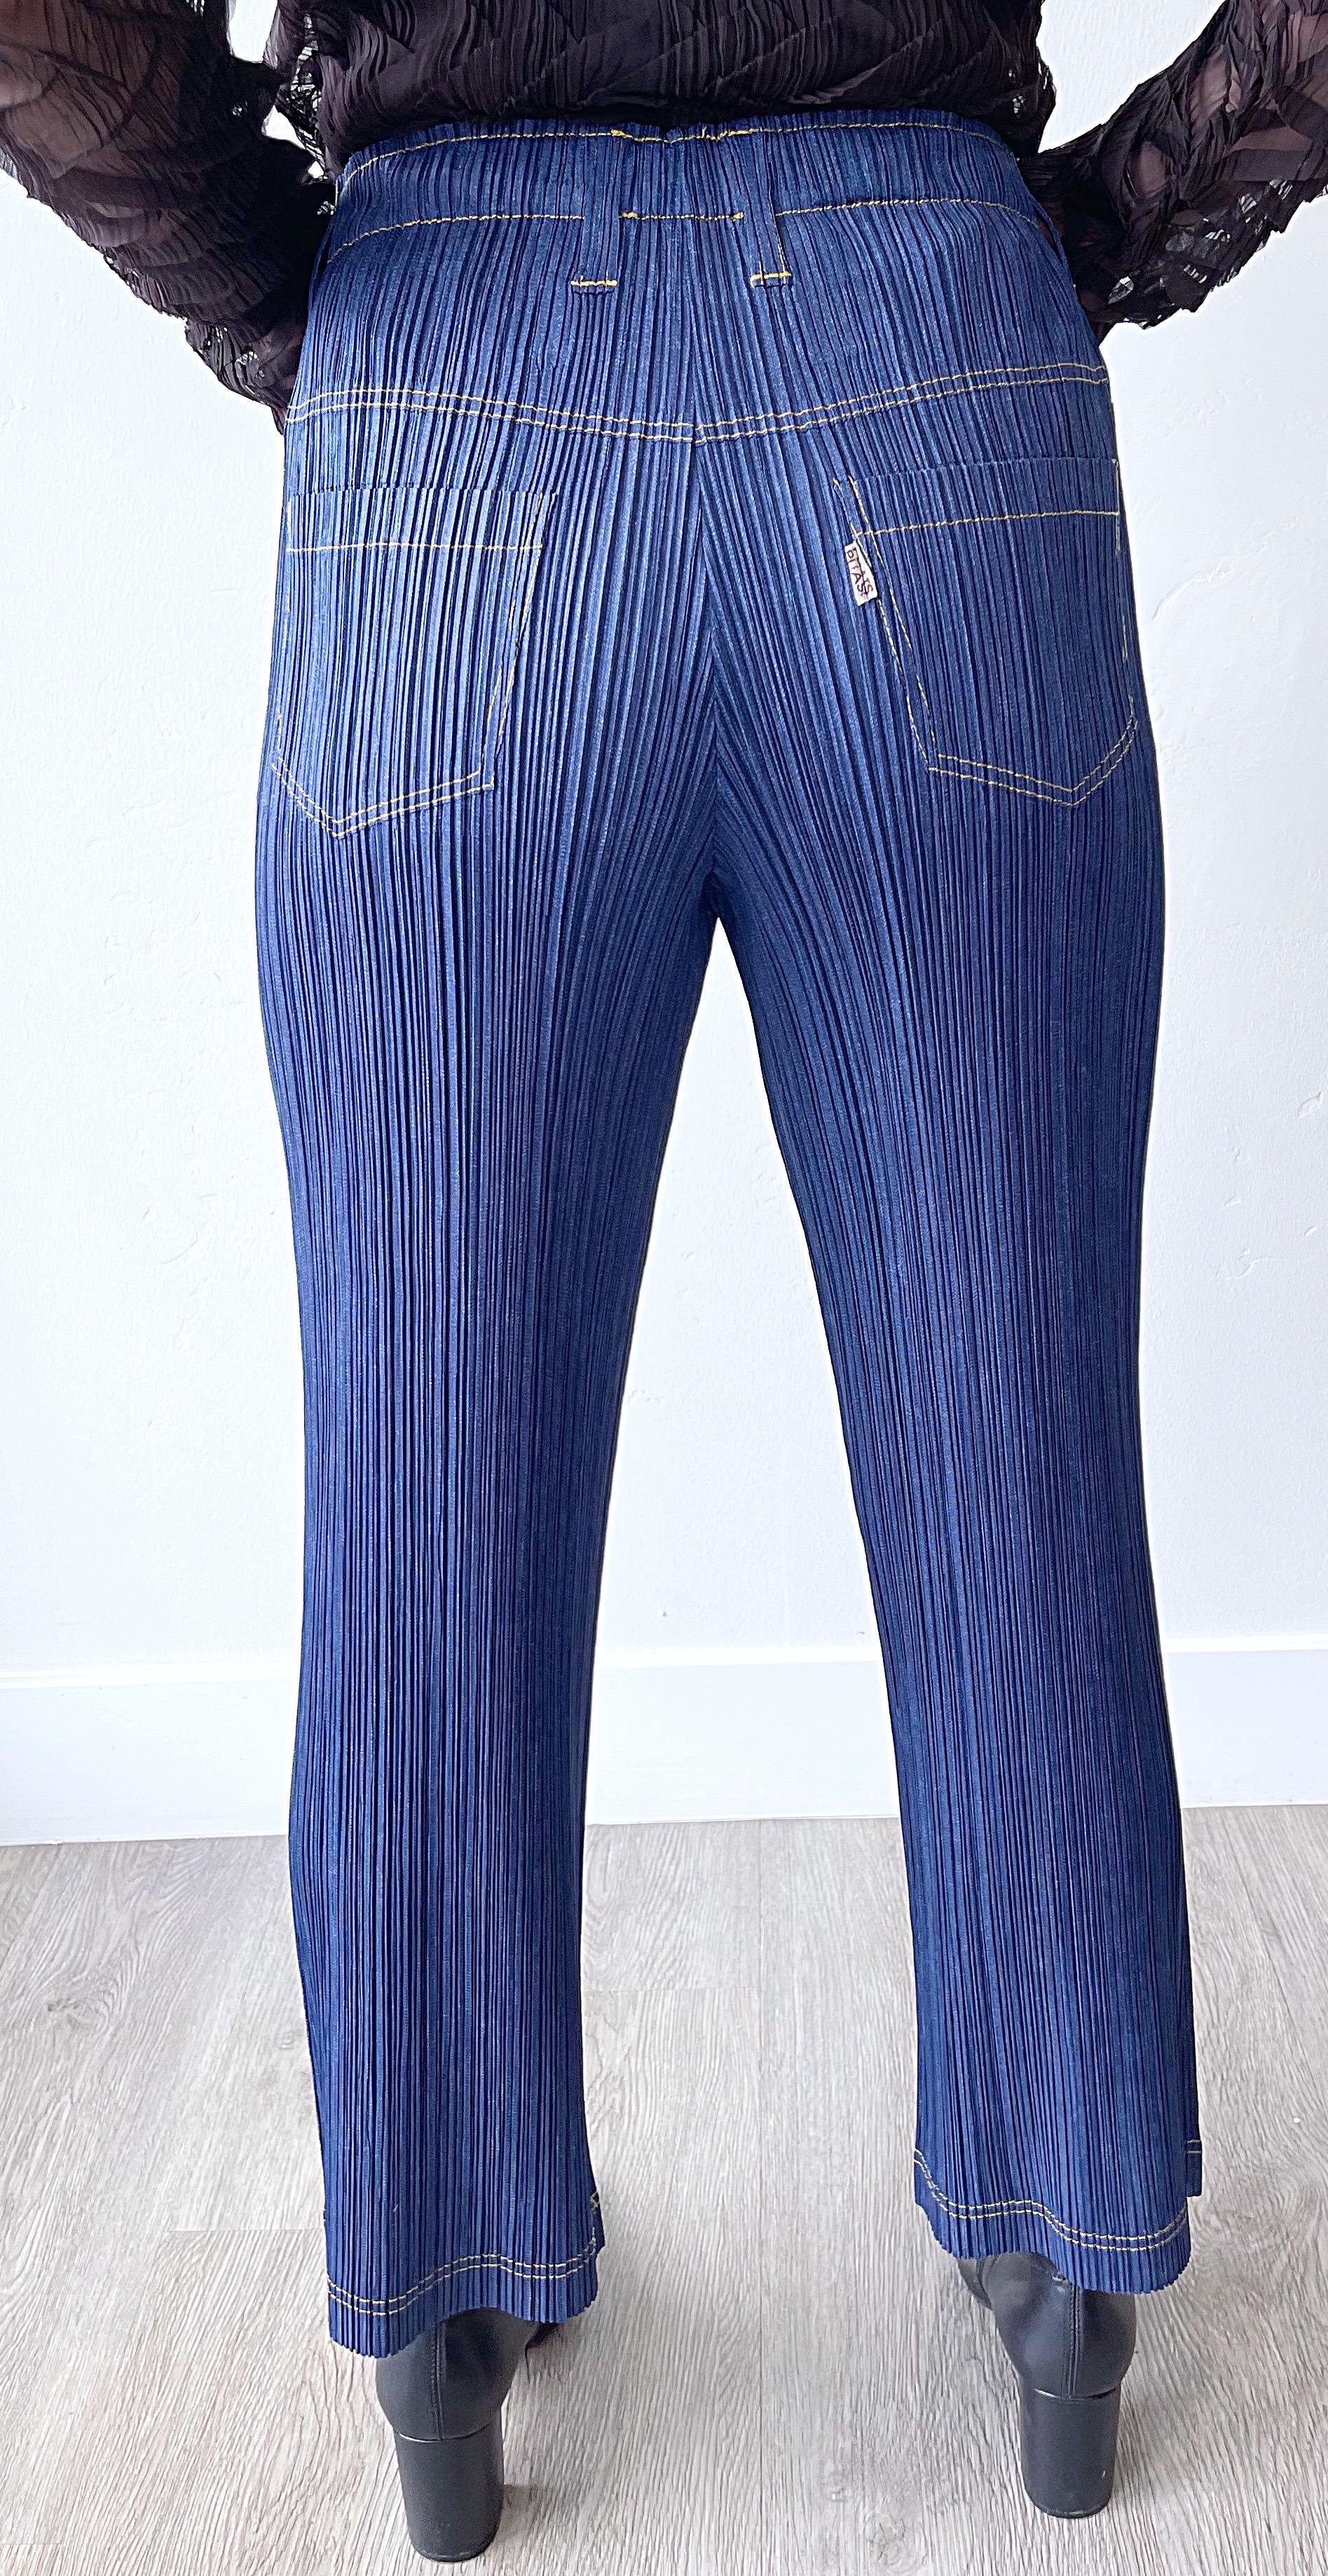 1990s Issey Miyake Pleats Please Trompe L’oeil Denim Blue Jeans Vintage Pants For Sale 4